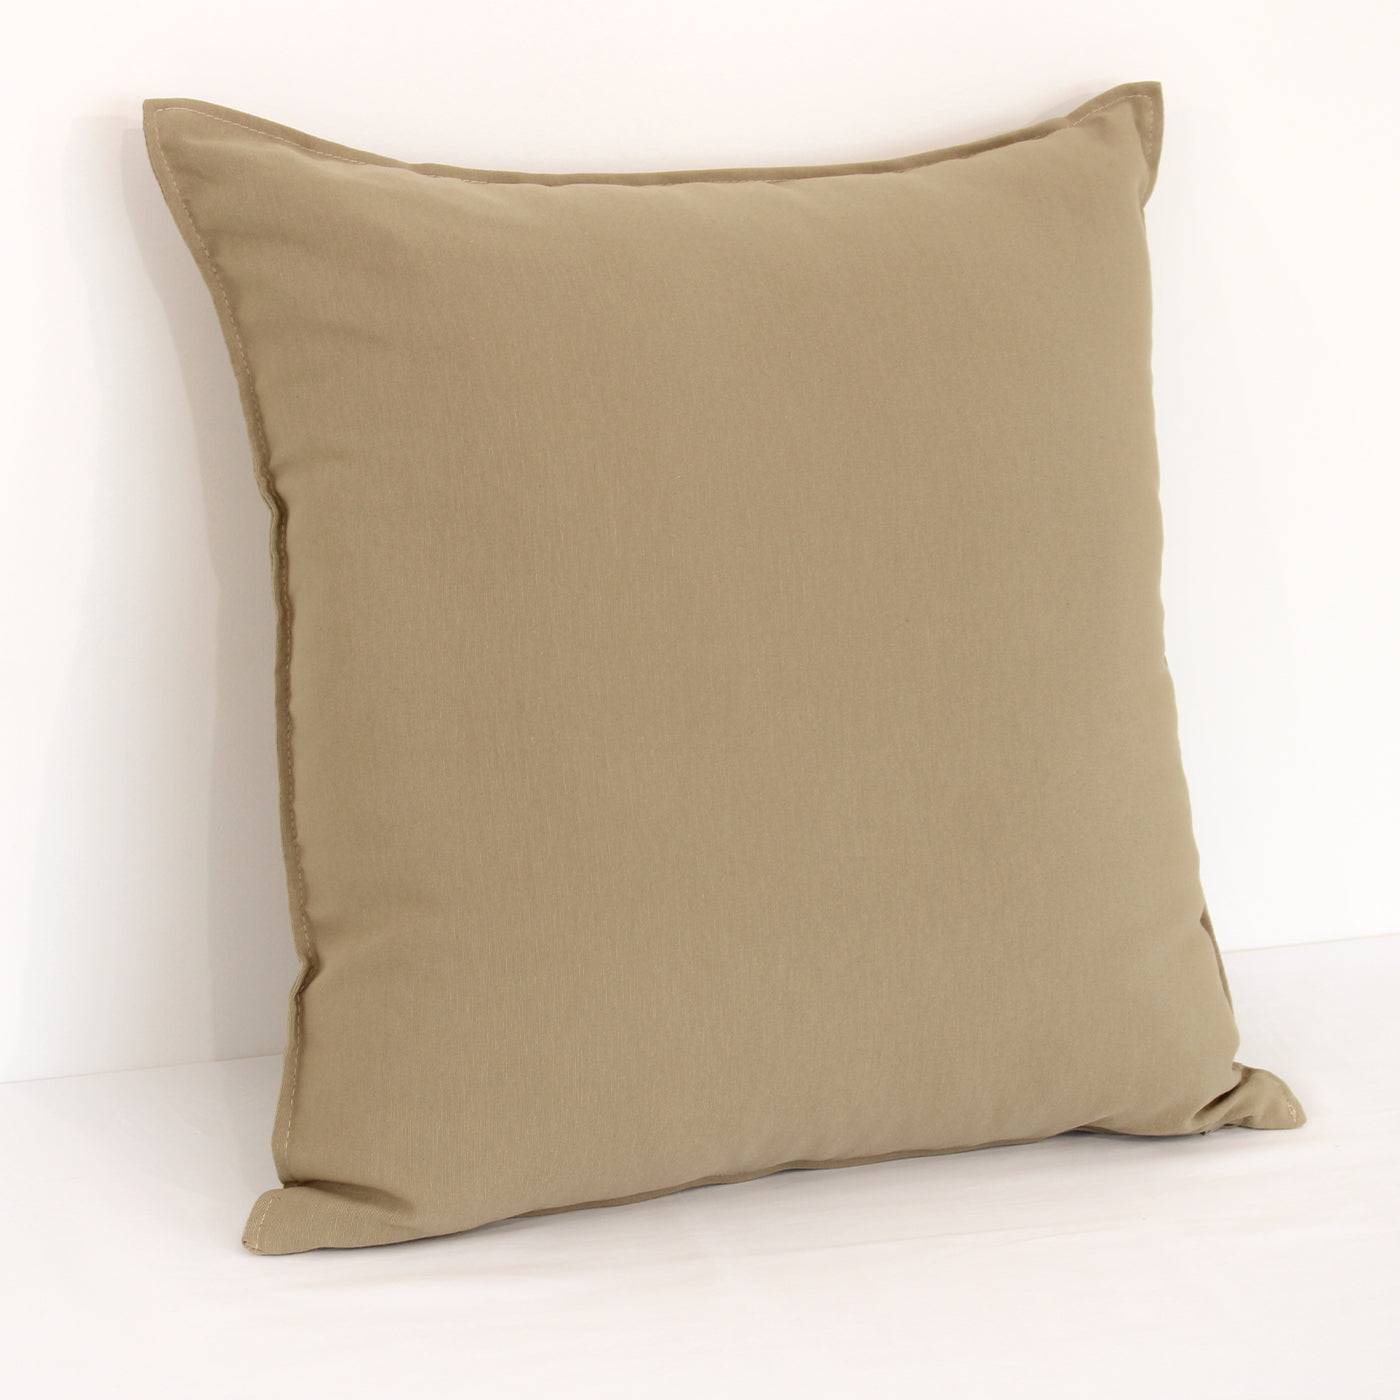 Opaque Hazelnut Set of 2 cushions - Alternative view 1